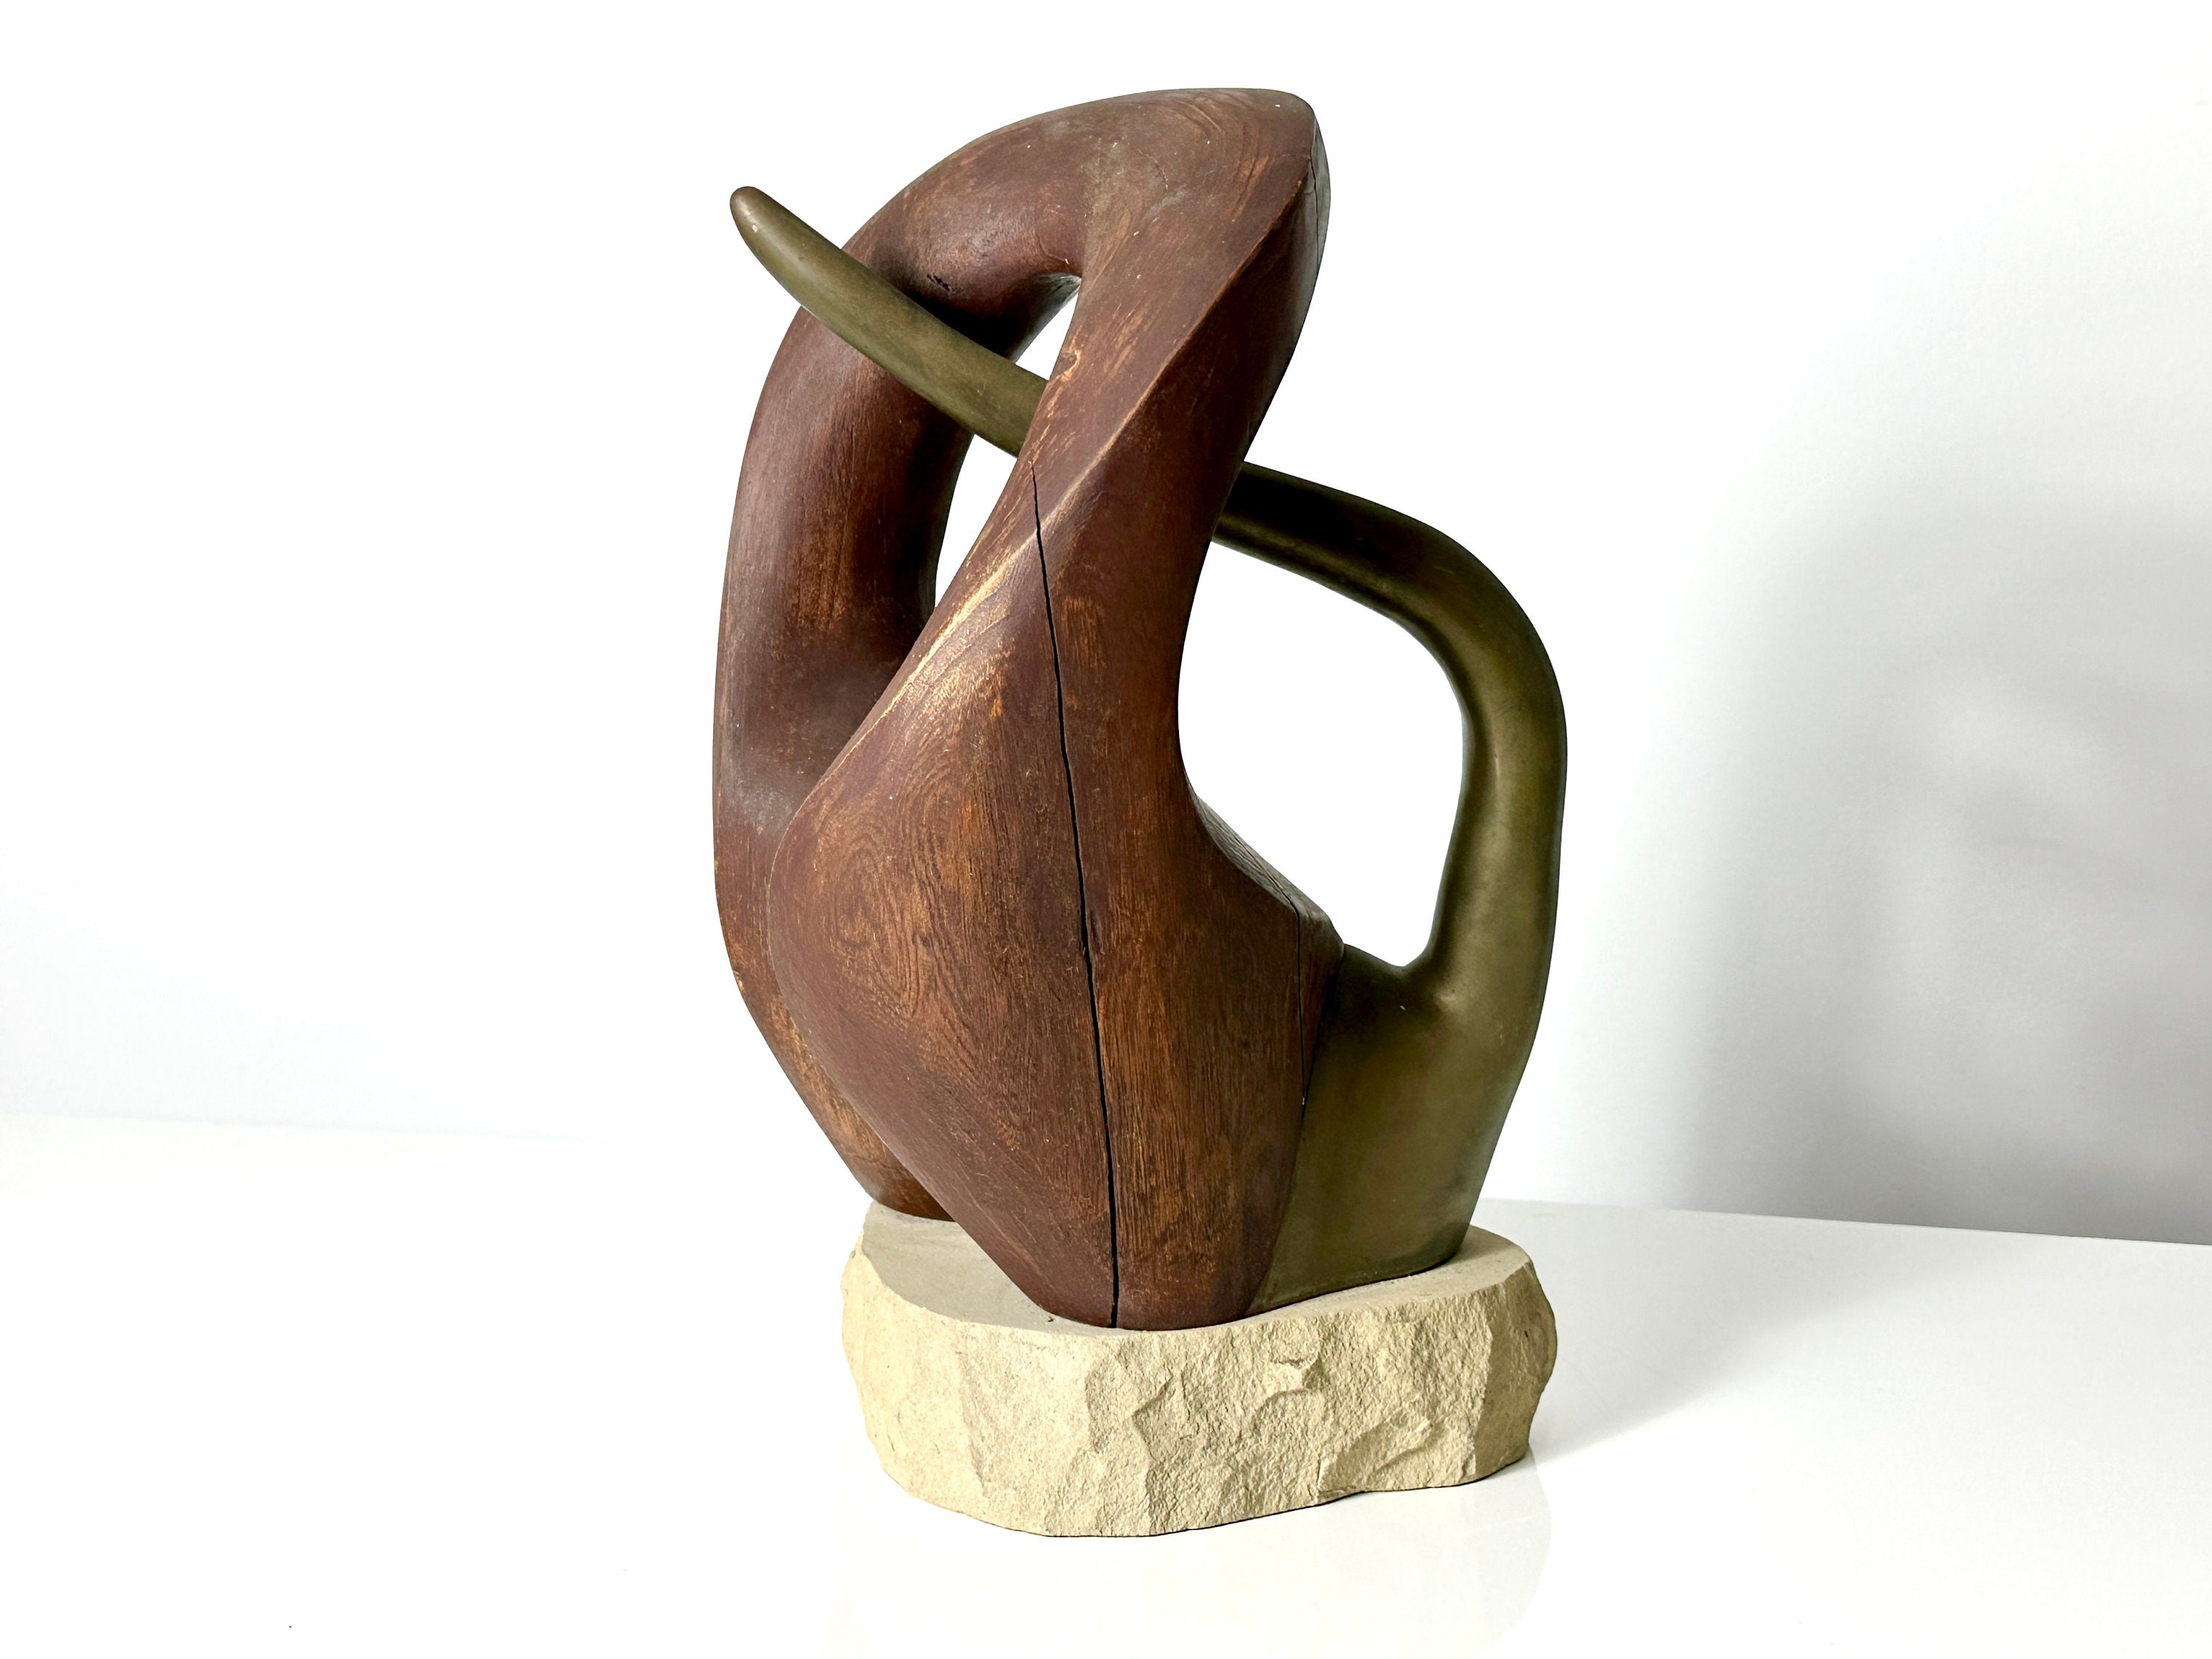 Vintage Mid Century Modern Biomorphic Wood Sculpture – Olson House